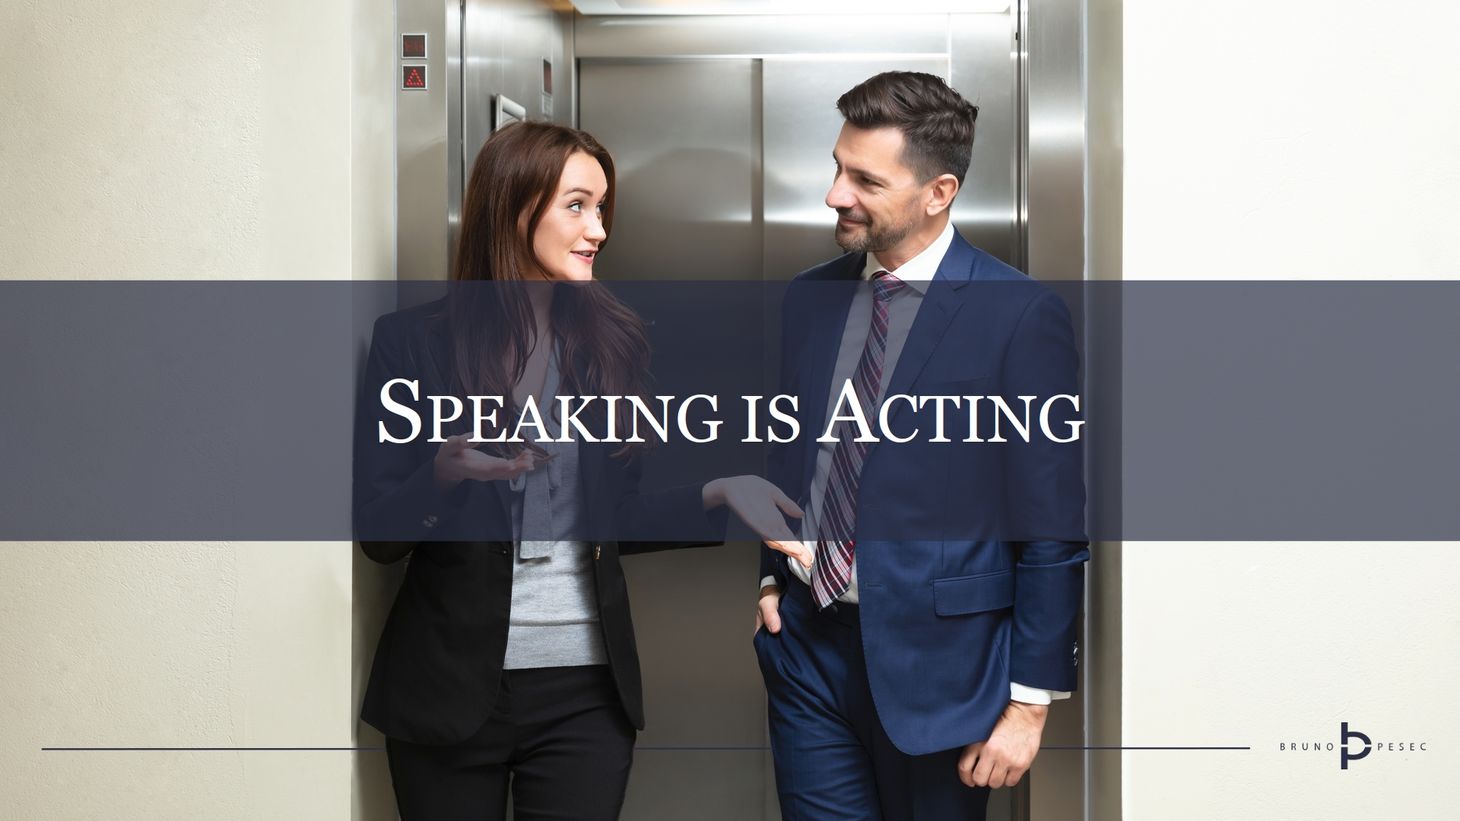 Speaking is acting